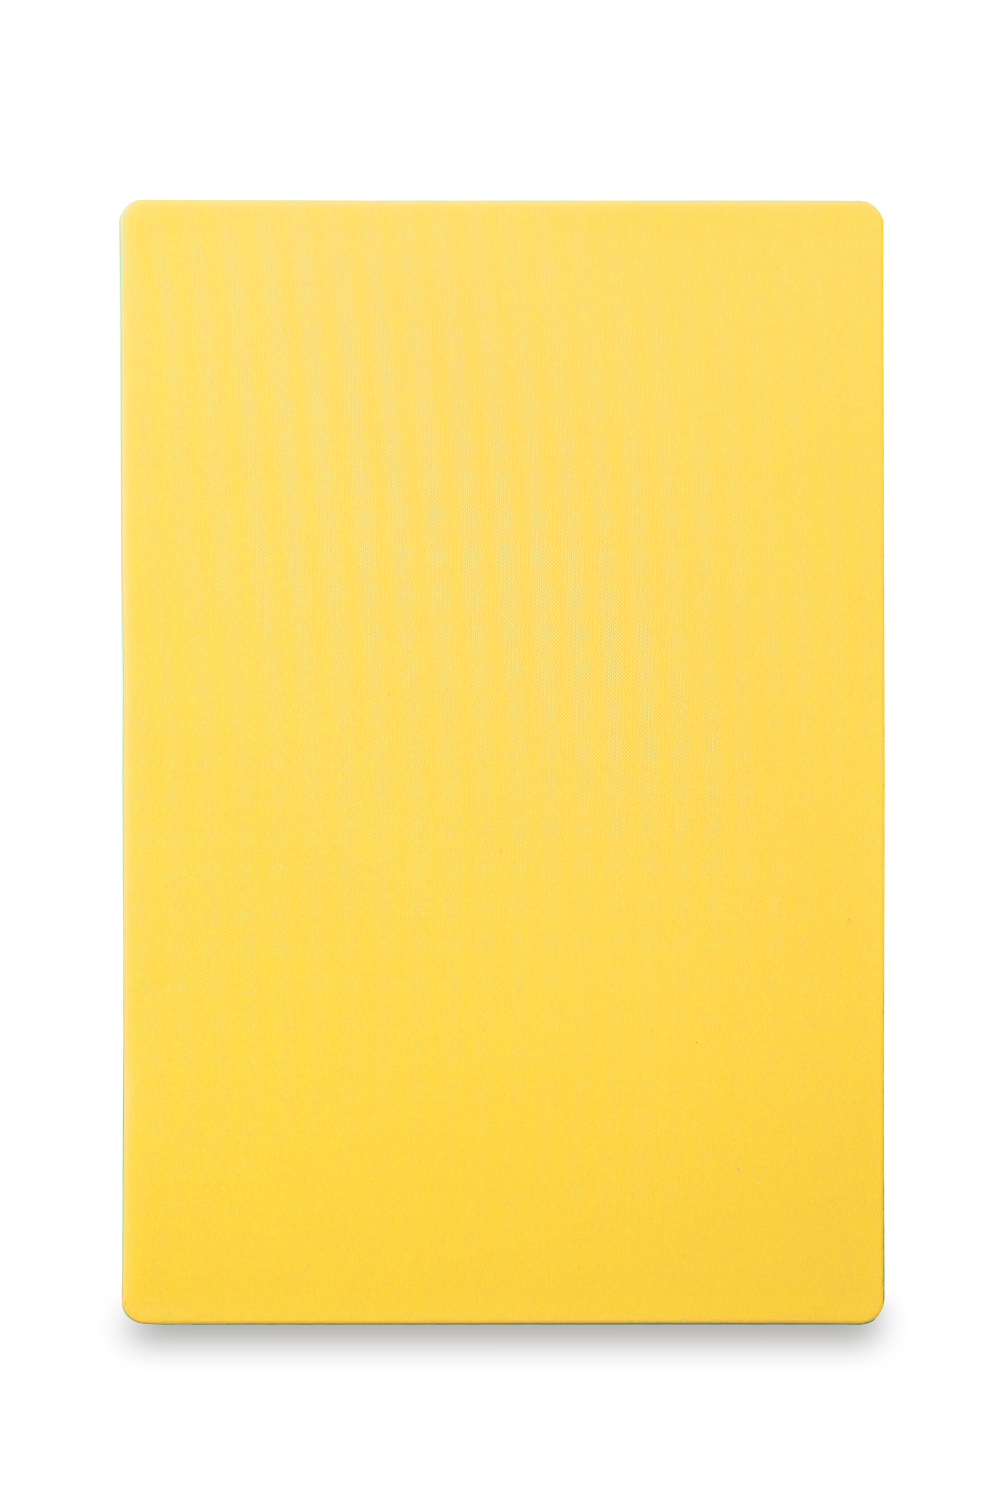 HACCP-Gelb Schneidbrett 600x400mm